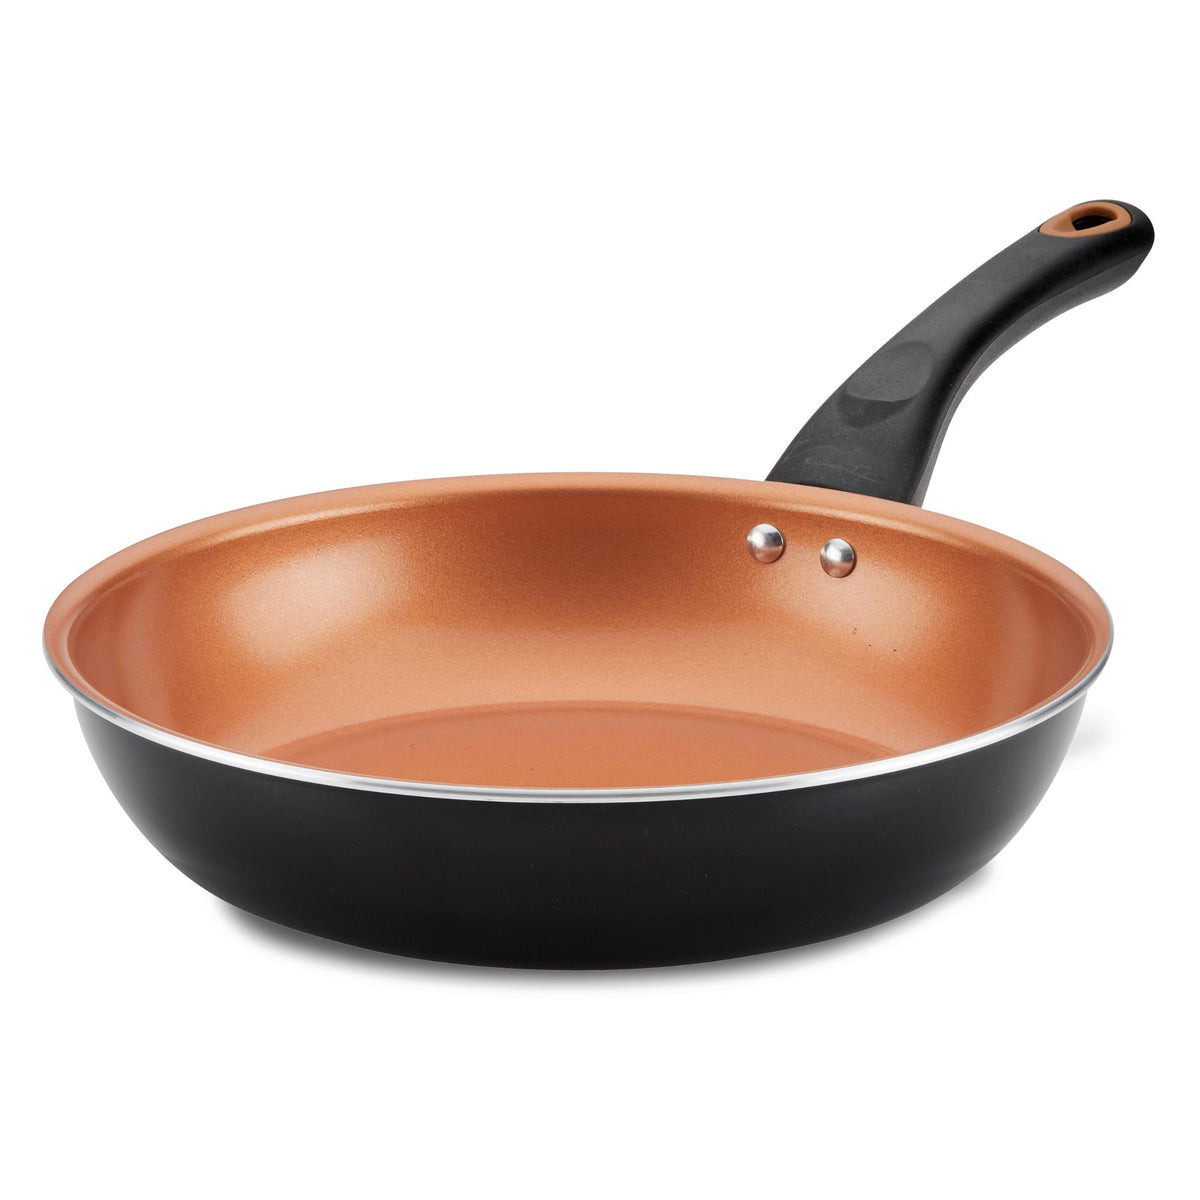 UNIWARE 1 Mini Egg Non-Stick Frying Pan,copper ceramic coating,55 (copper  gold)